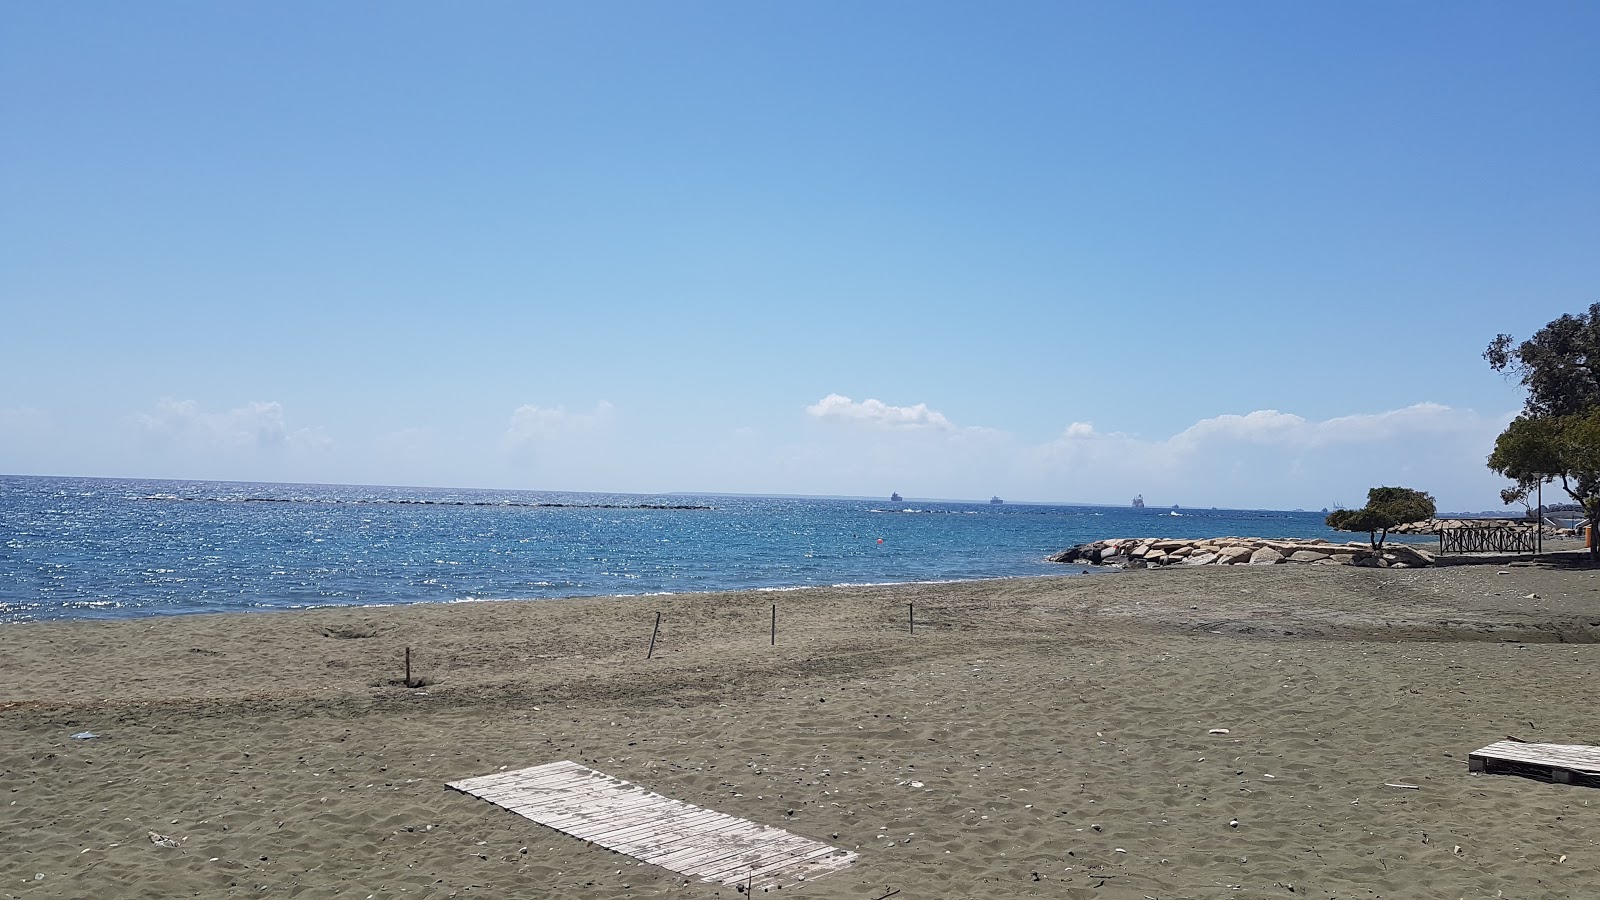 Foto de Armonia beach - lugar popular entre os apreciadores de relaxamento